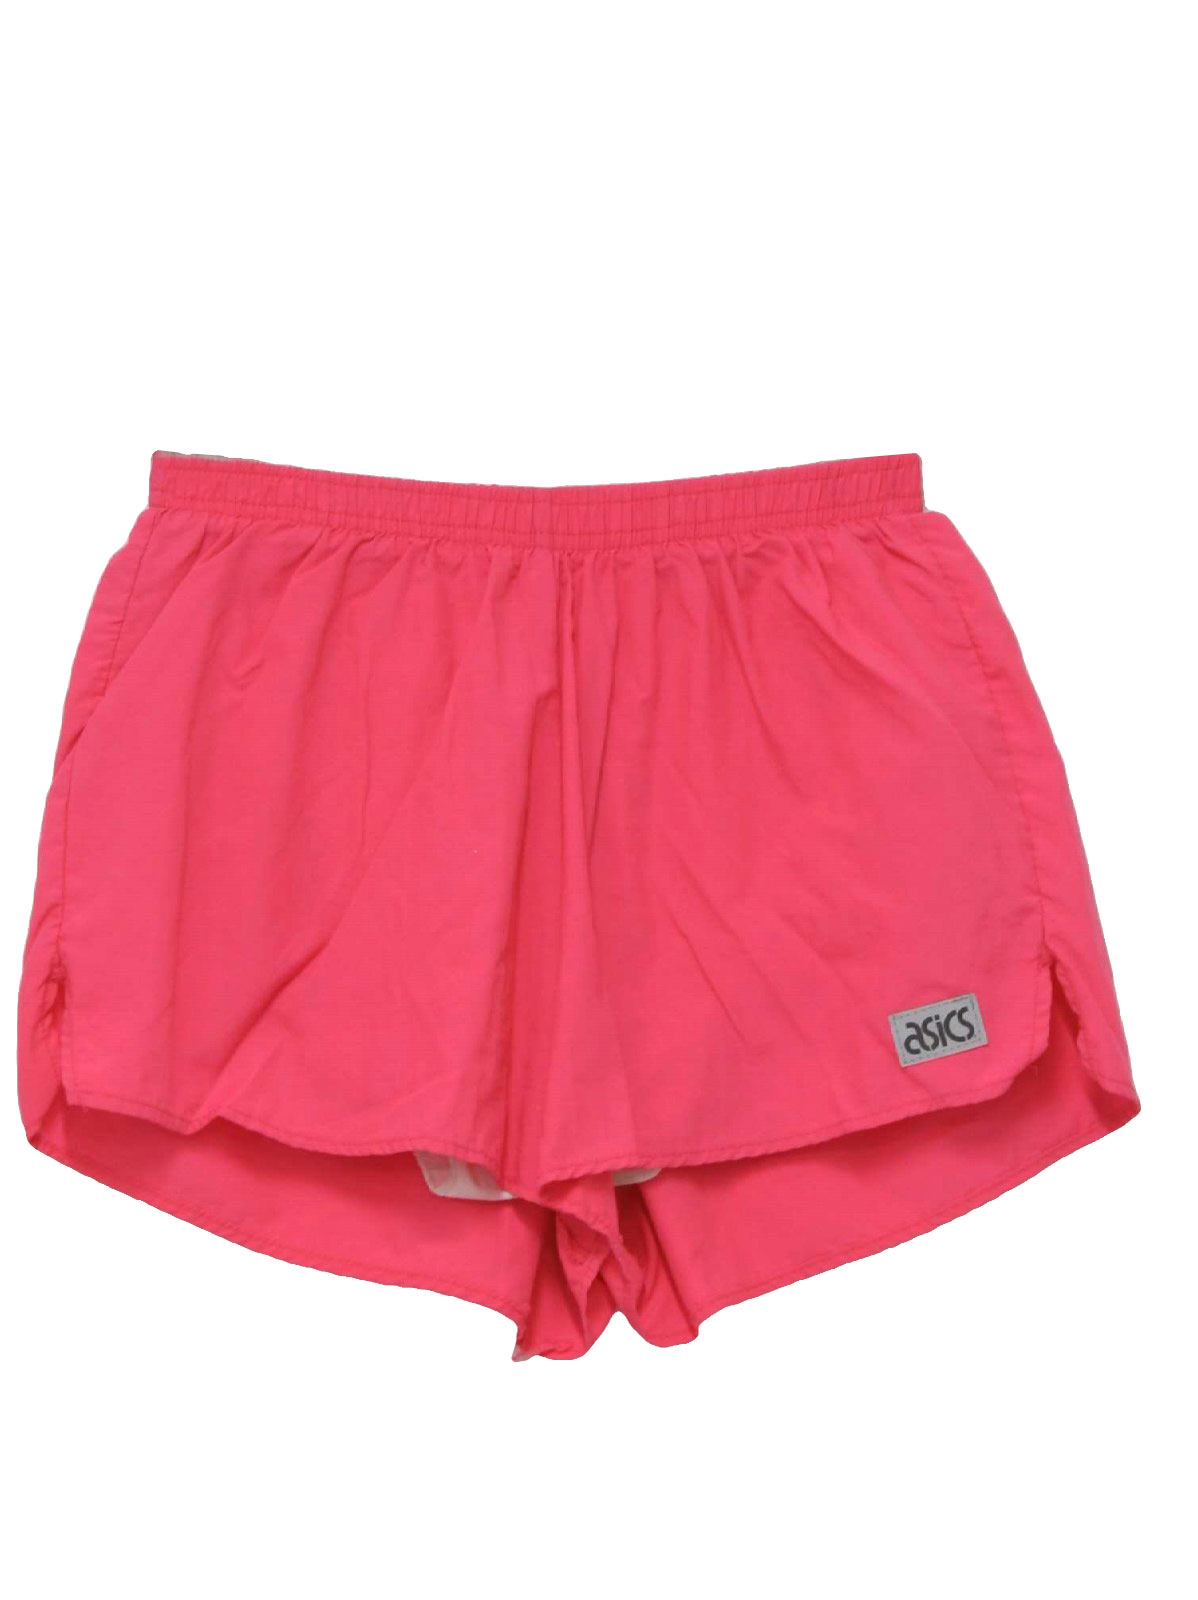 Asics 1980s Vintage Shorts: 80s -Asics- Mens hot pink nylon blend